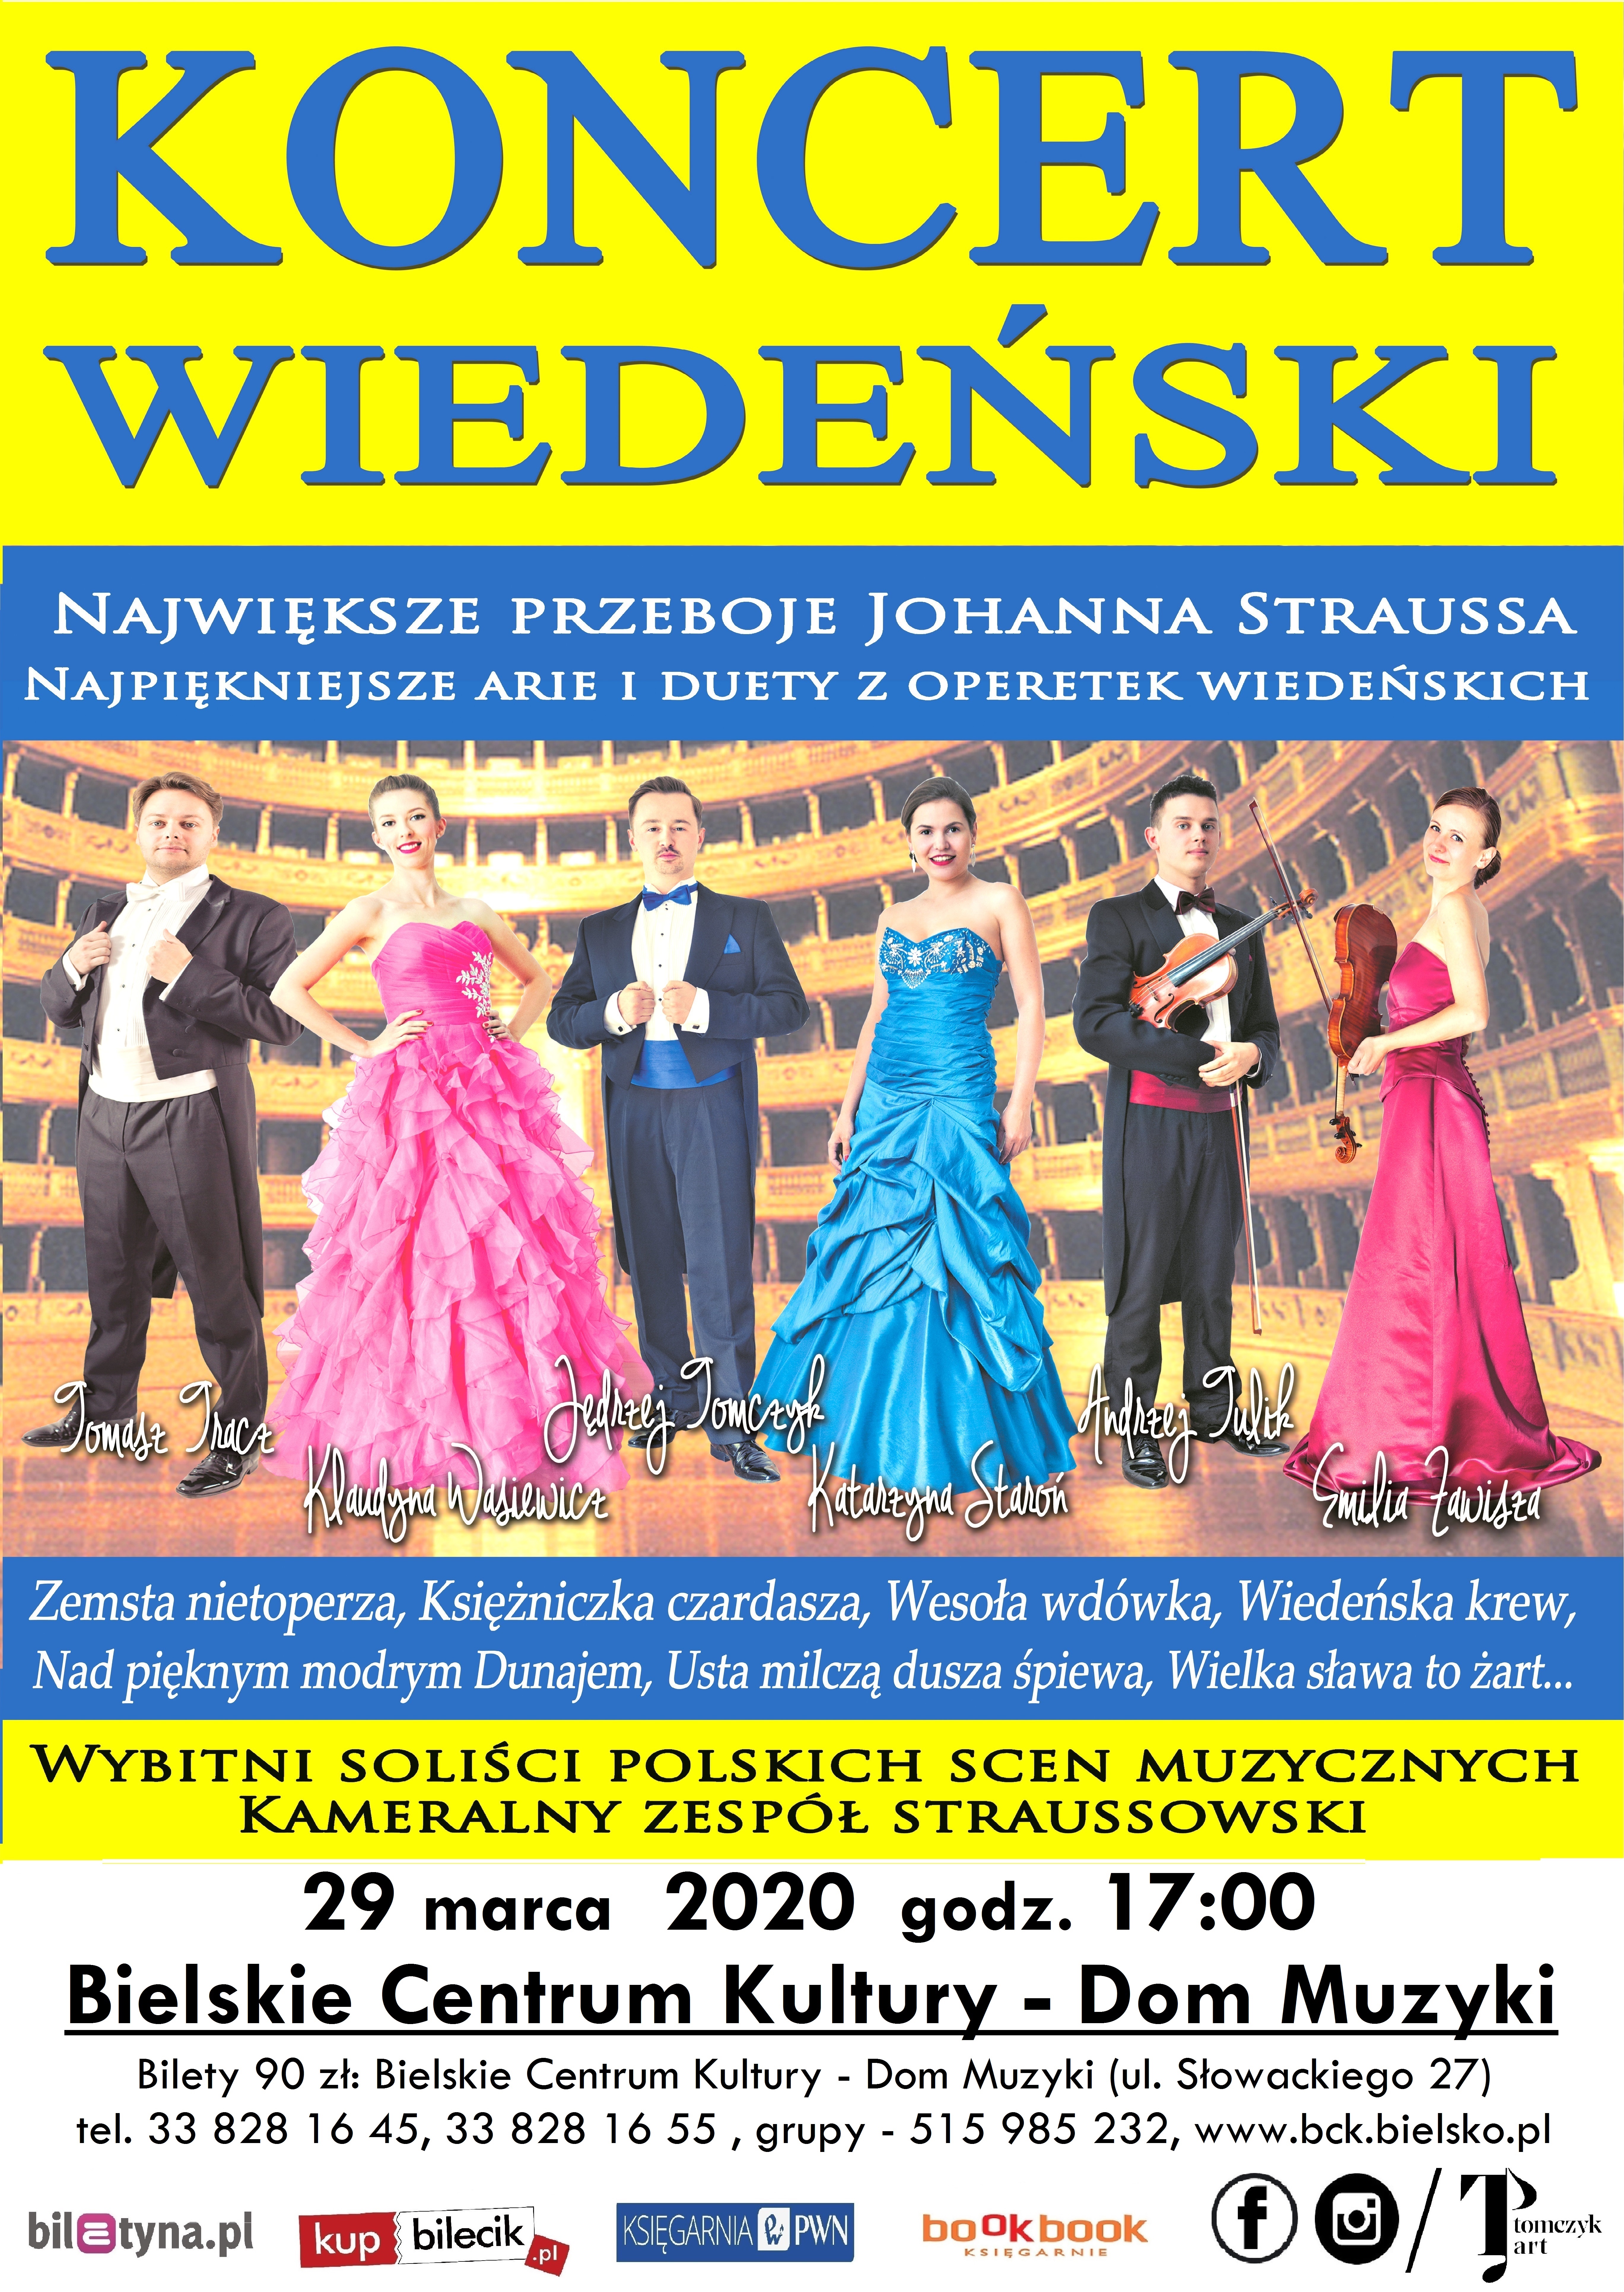  Koncert wiedeński 